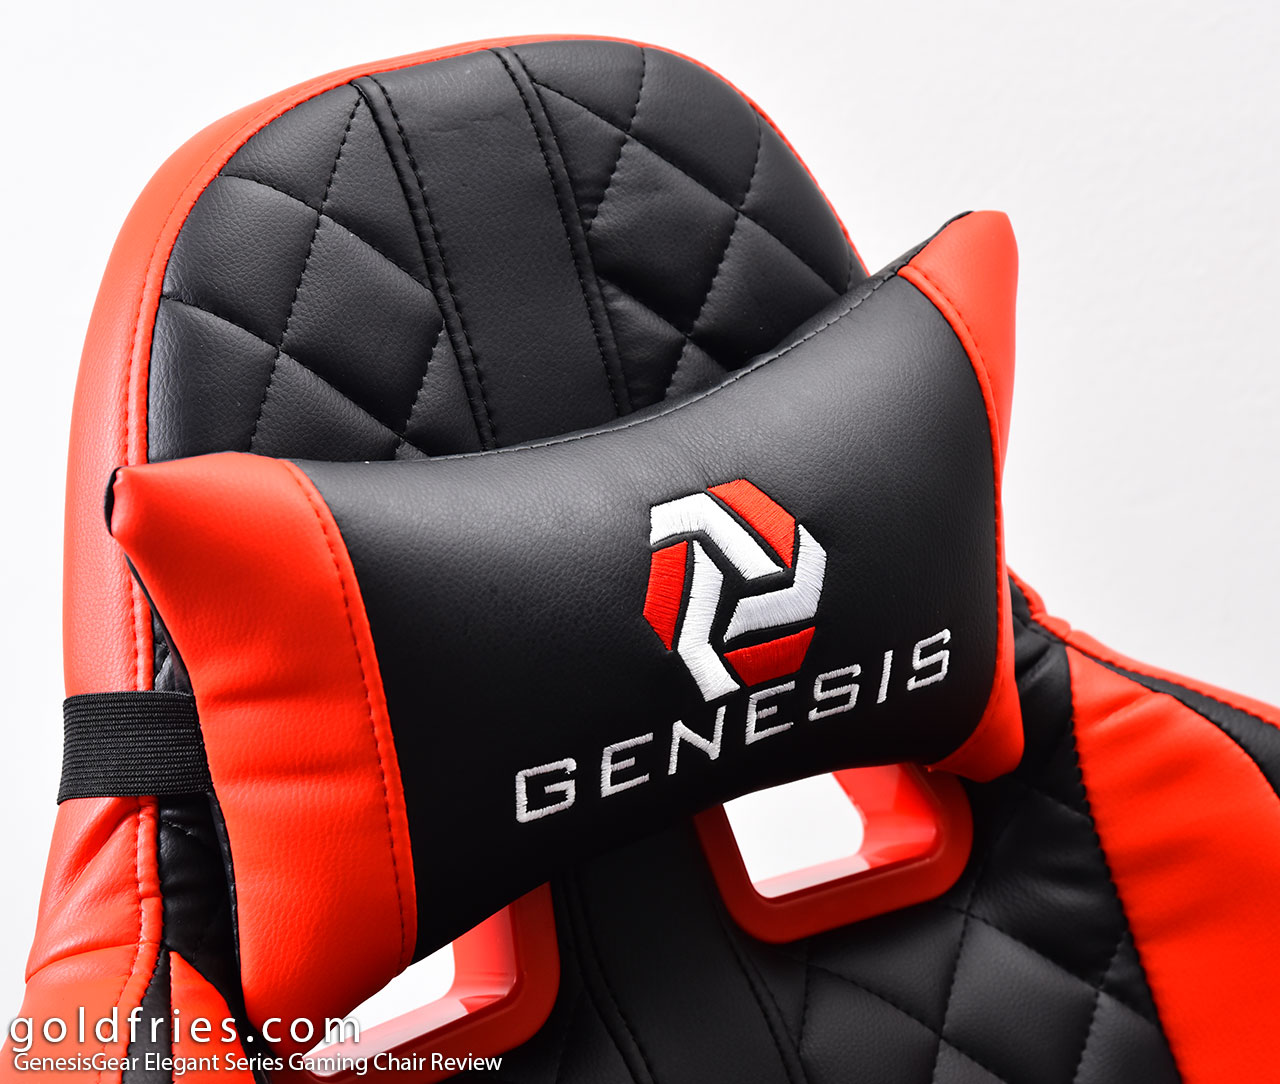  GenesisGear Elegant Series Gaming Chair Review